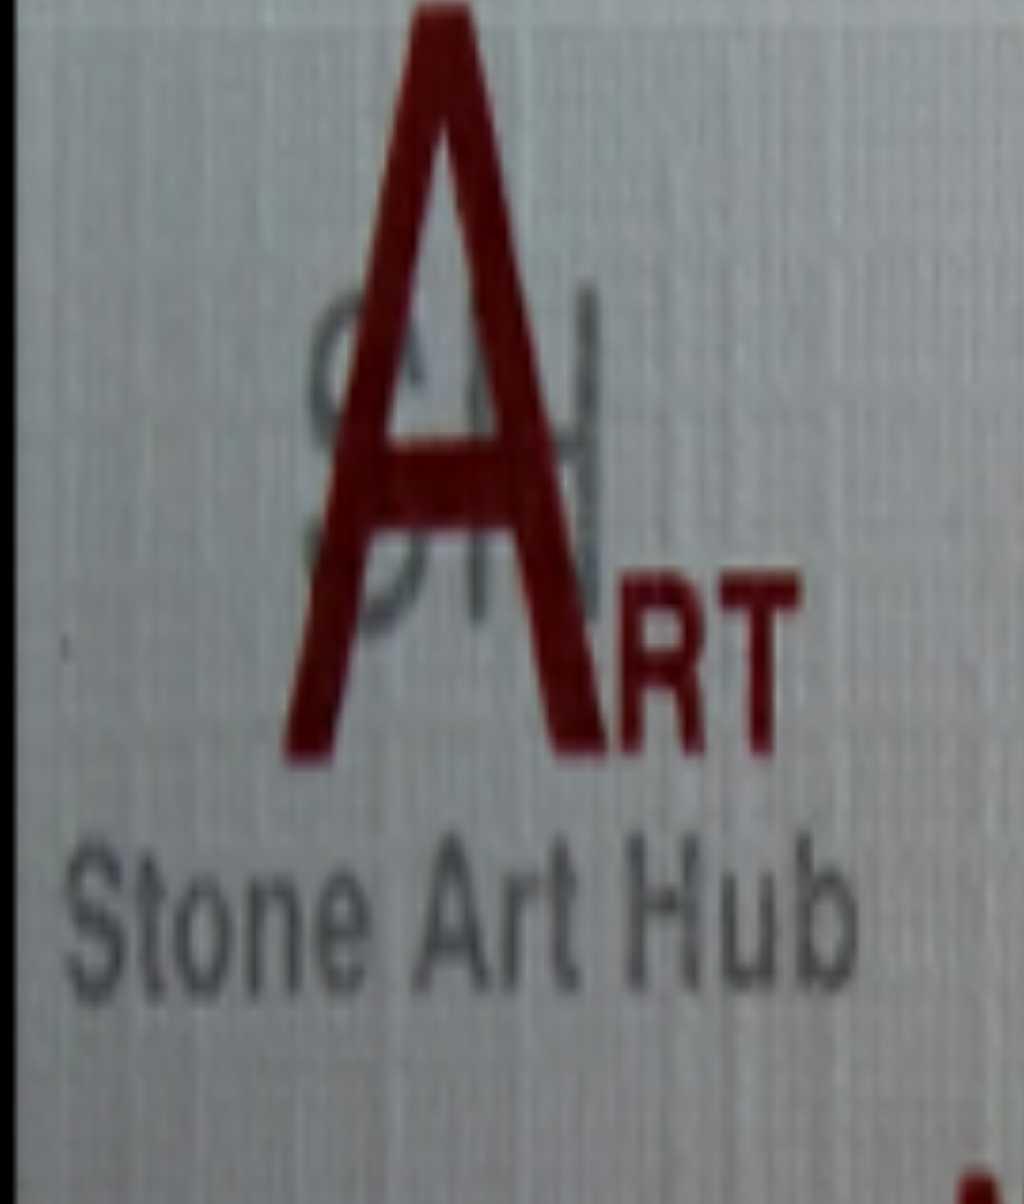 Stone Art Hub